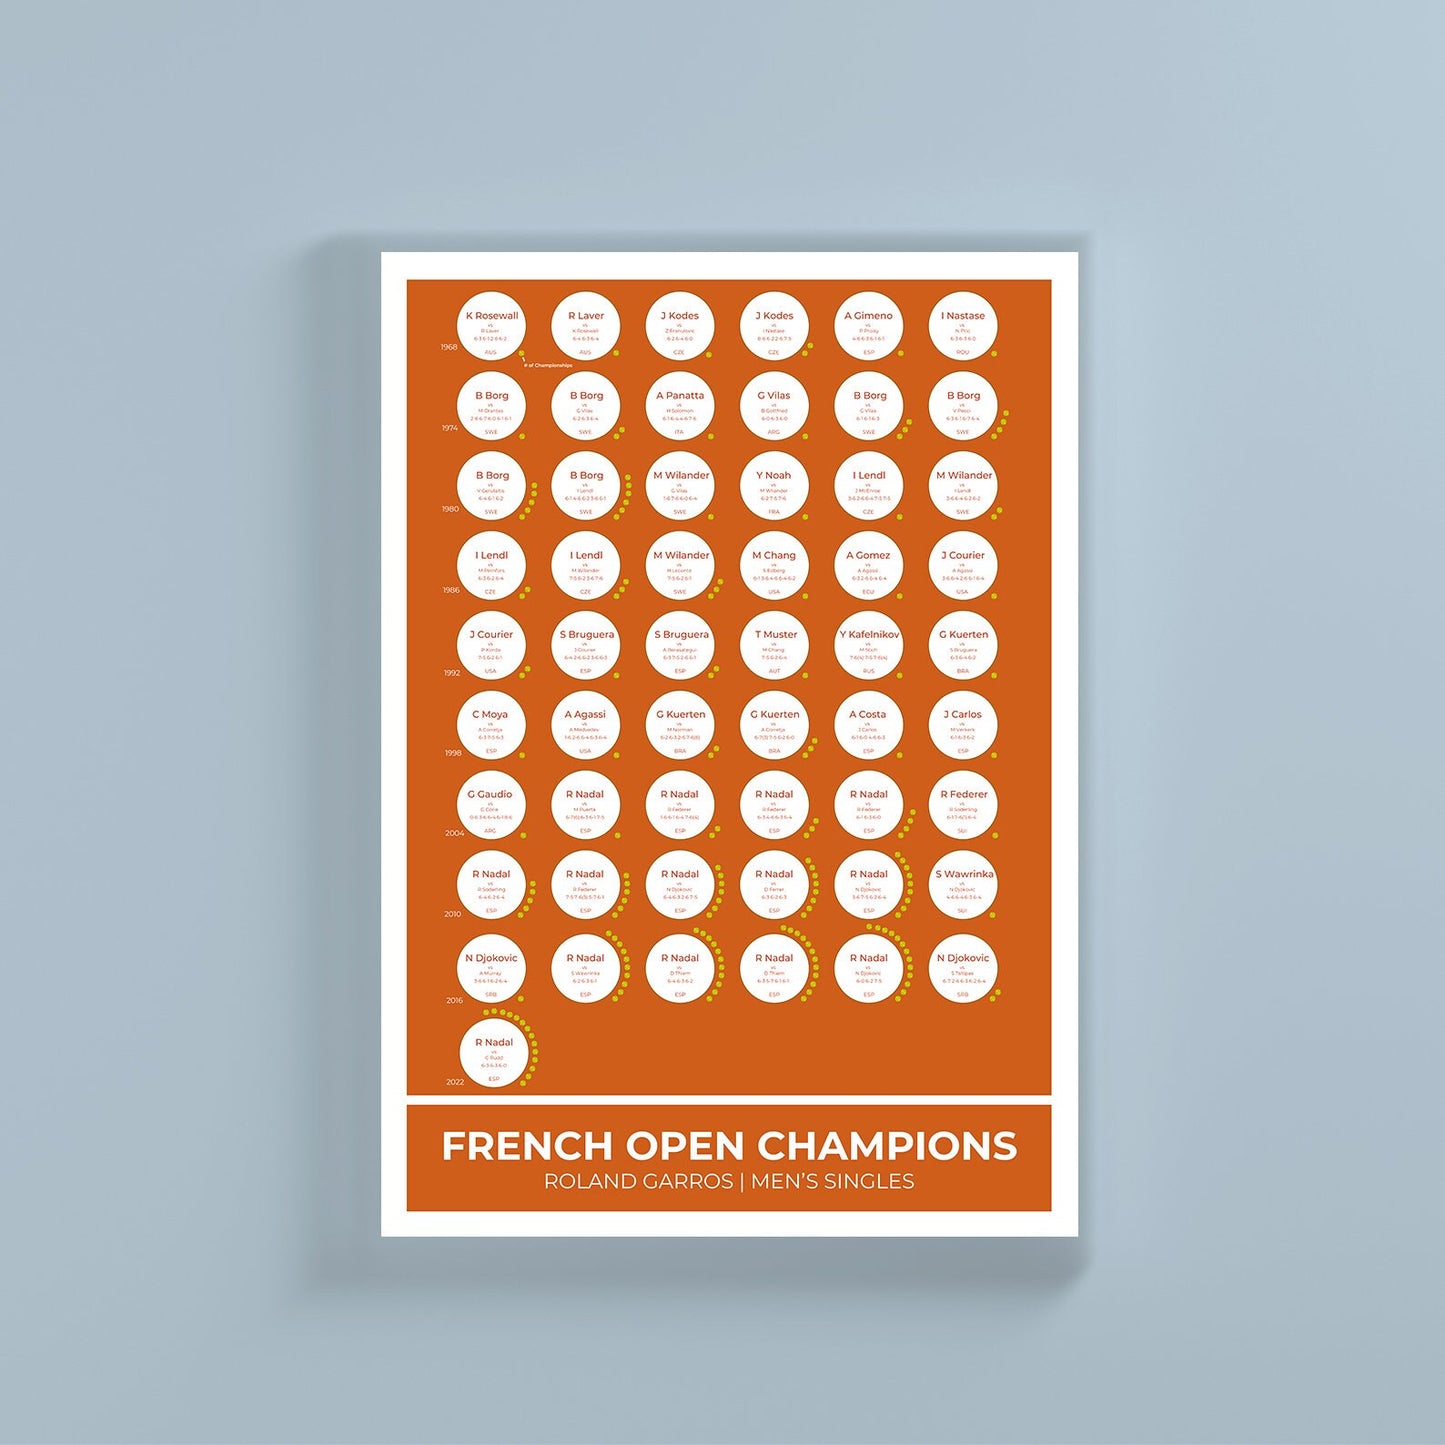 Champions du Grand Chelem de Roland-Garros